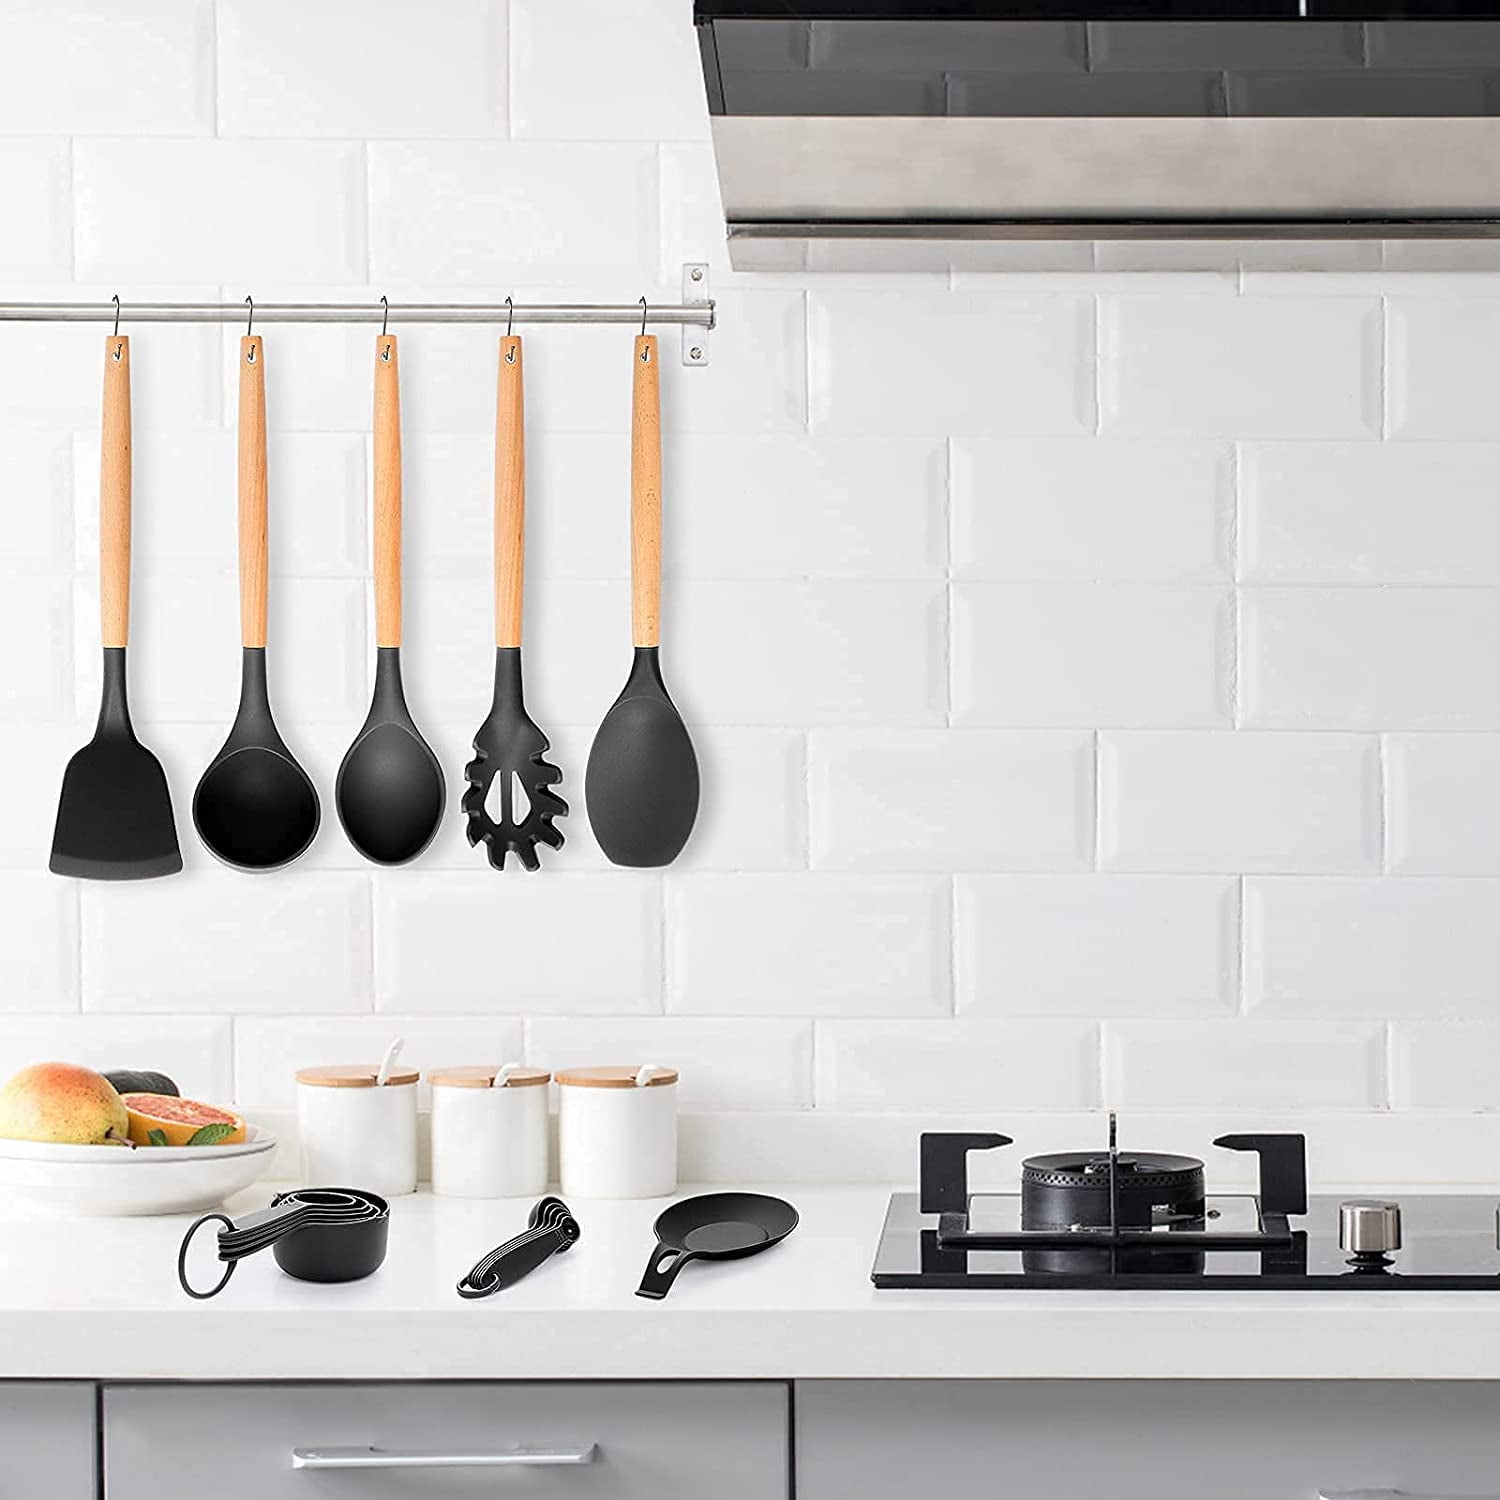 utosday cooking utensils set, 33pcs silicone kitchen utensils set